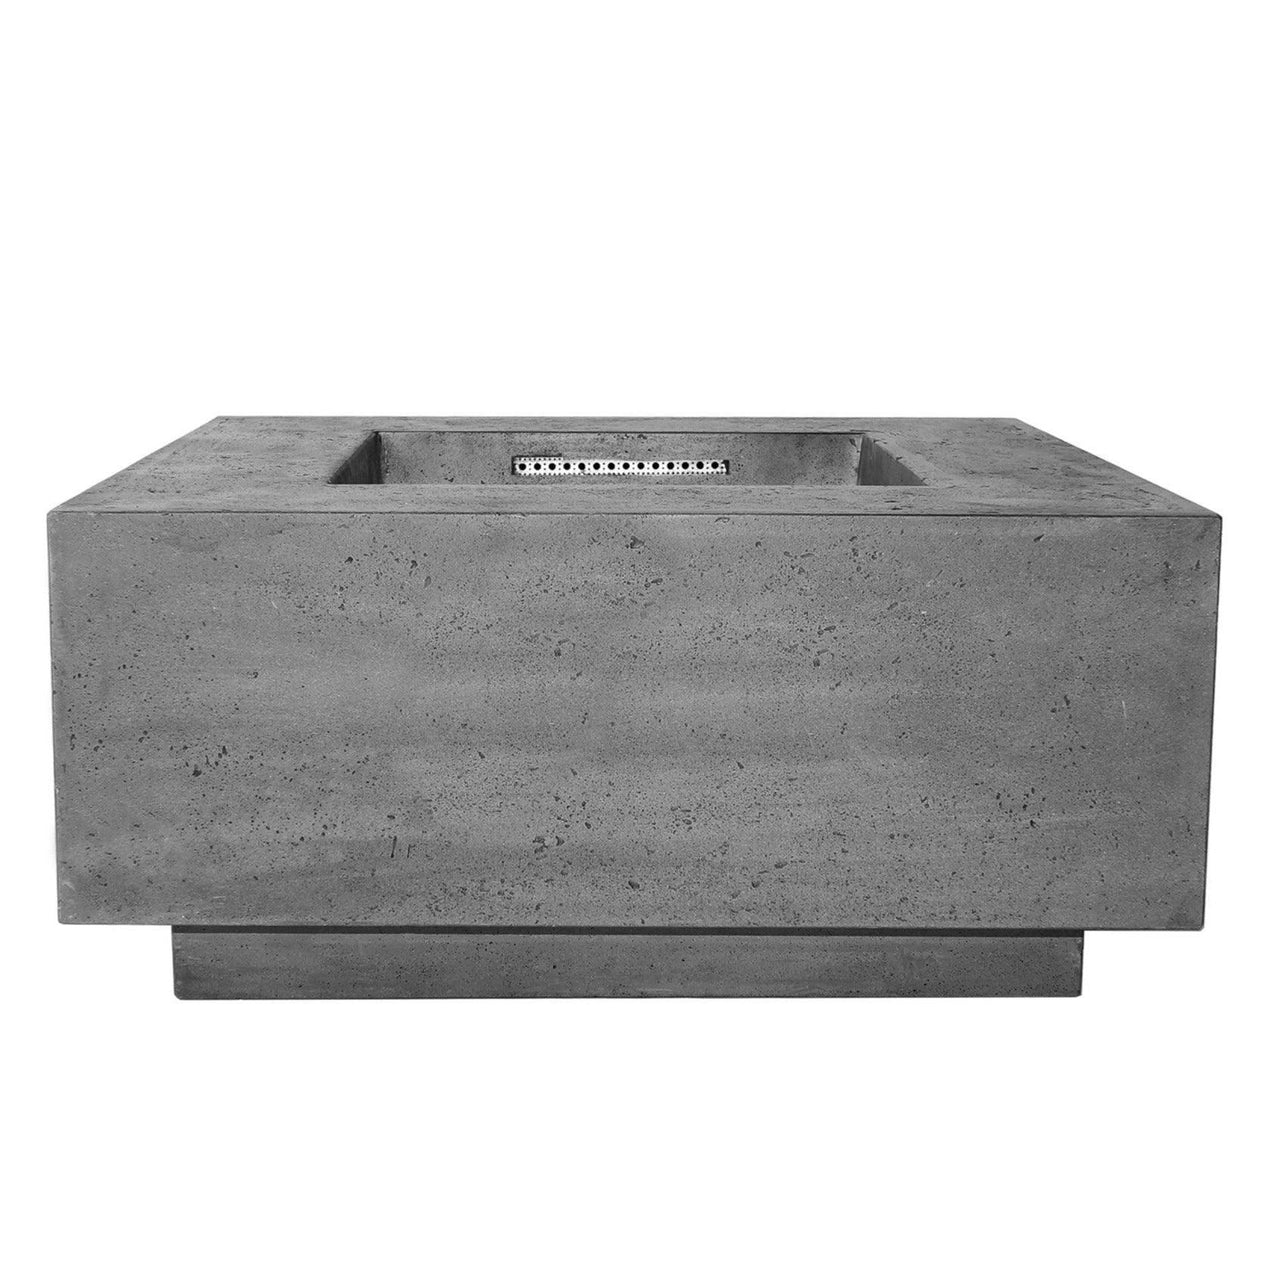 Prism Hardscapes - Tavola Series 2 Square Concrete Fire Pit Table - Fire Pit Stock